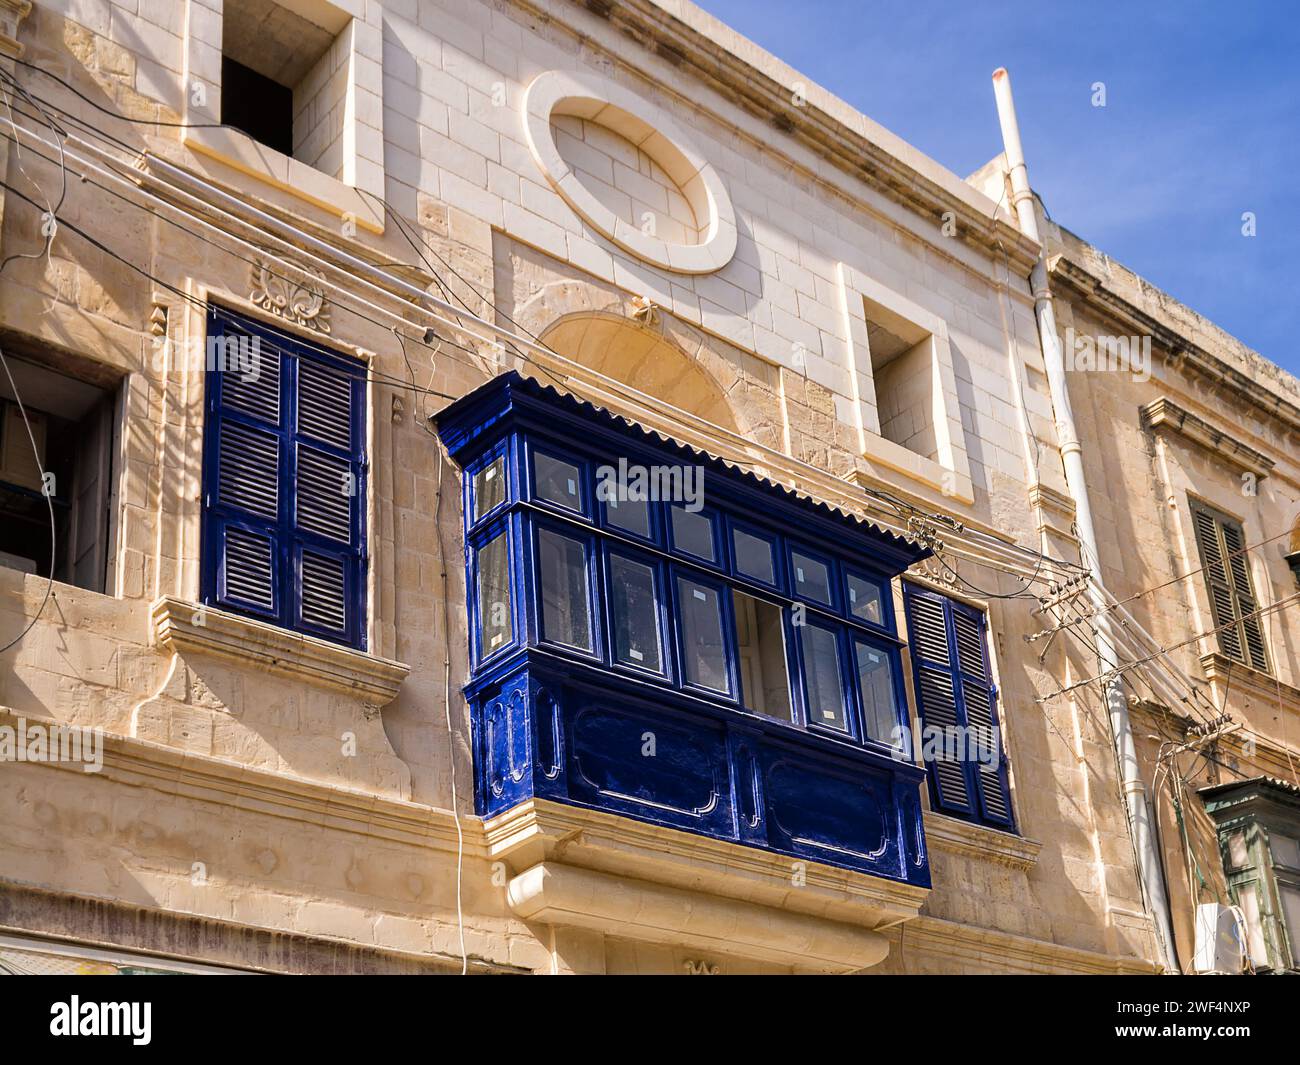 Gallarija, closed balconies, typical of Malta, blue in colour Stock Photo